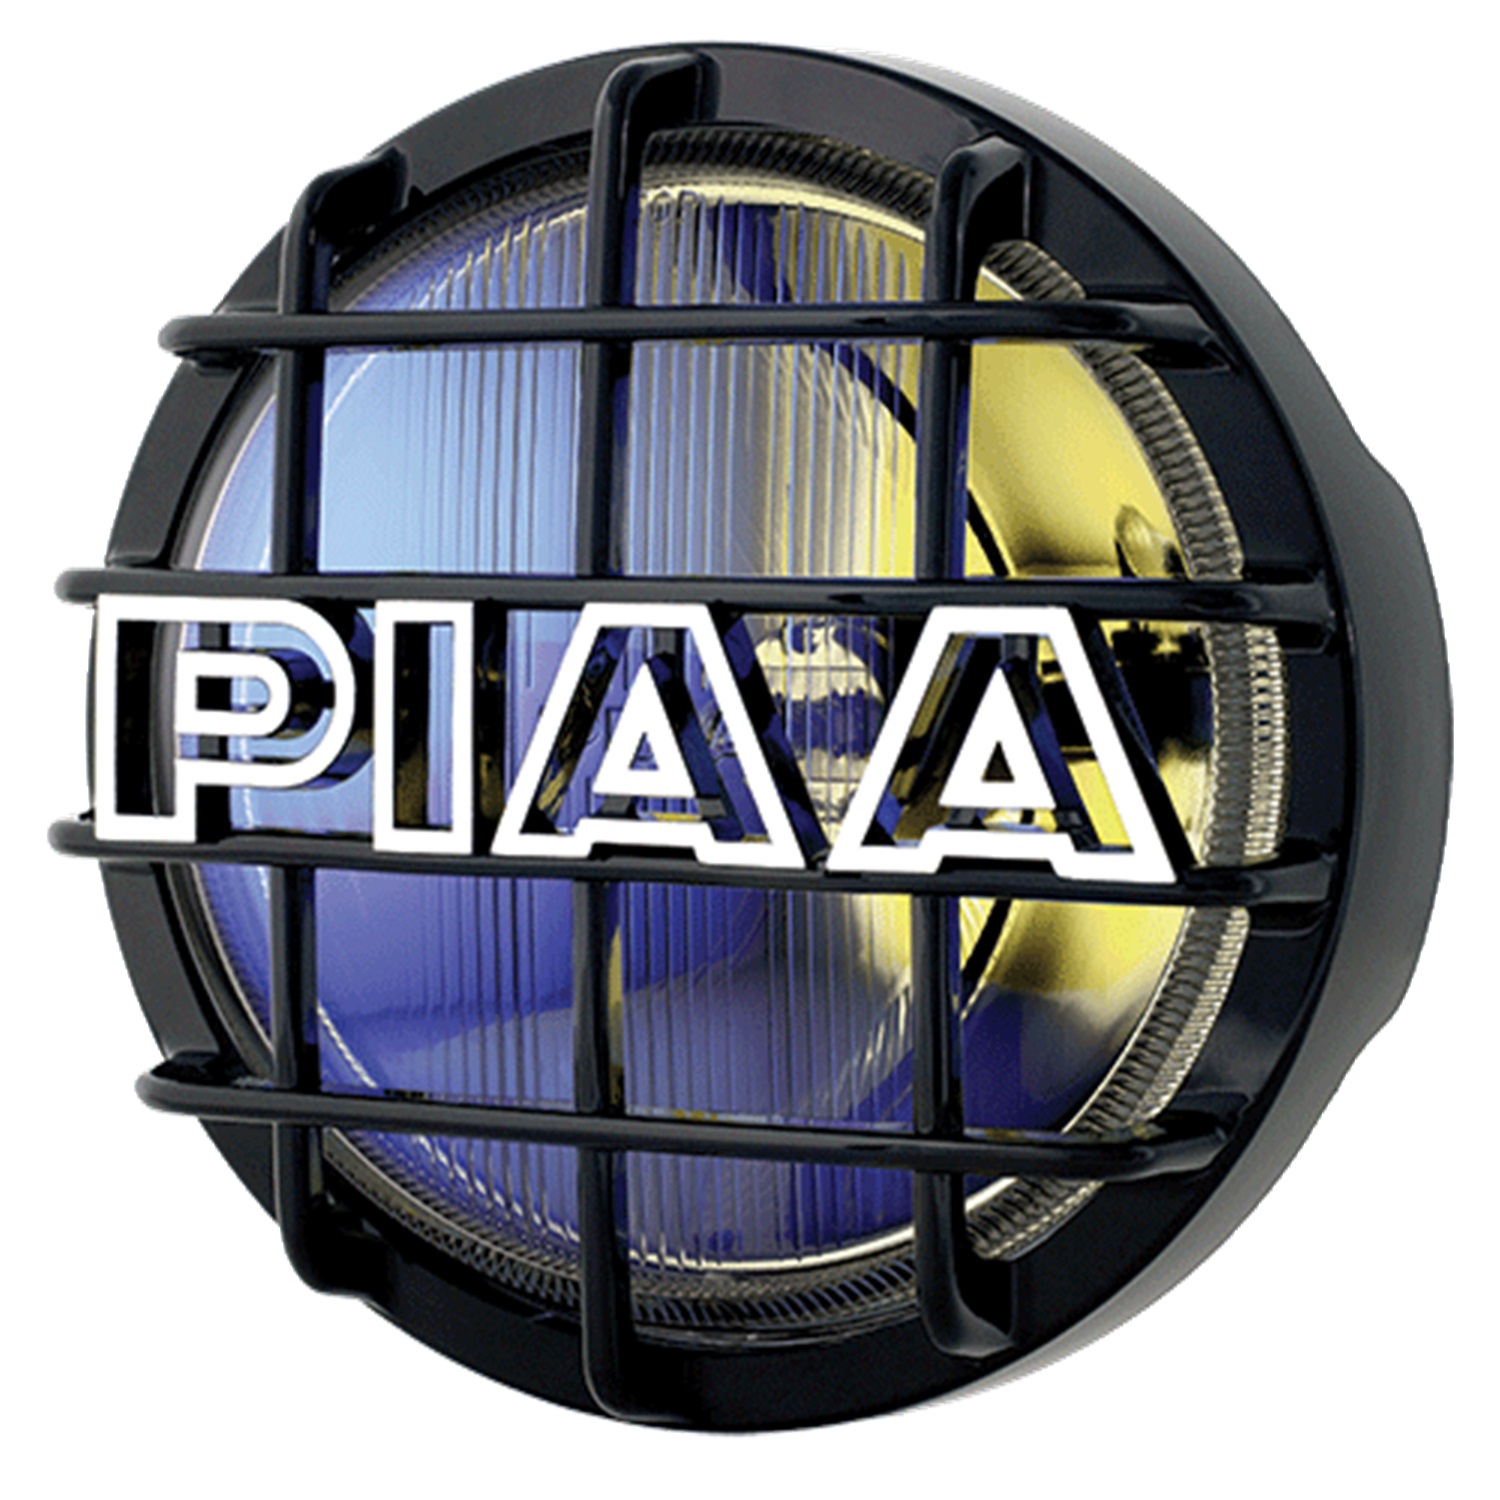 PIAA PIAA 5213 520 ION Driving Lamp